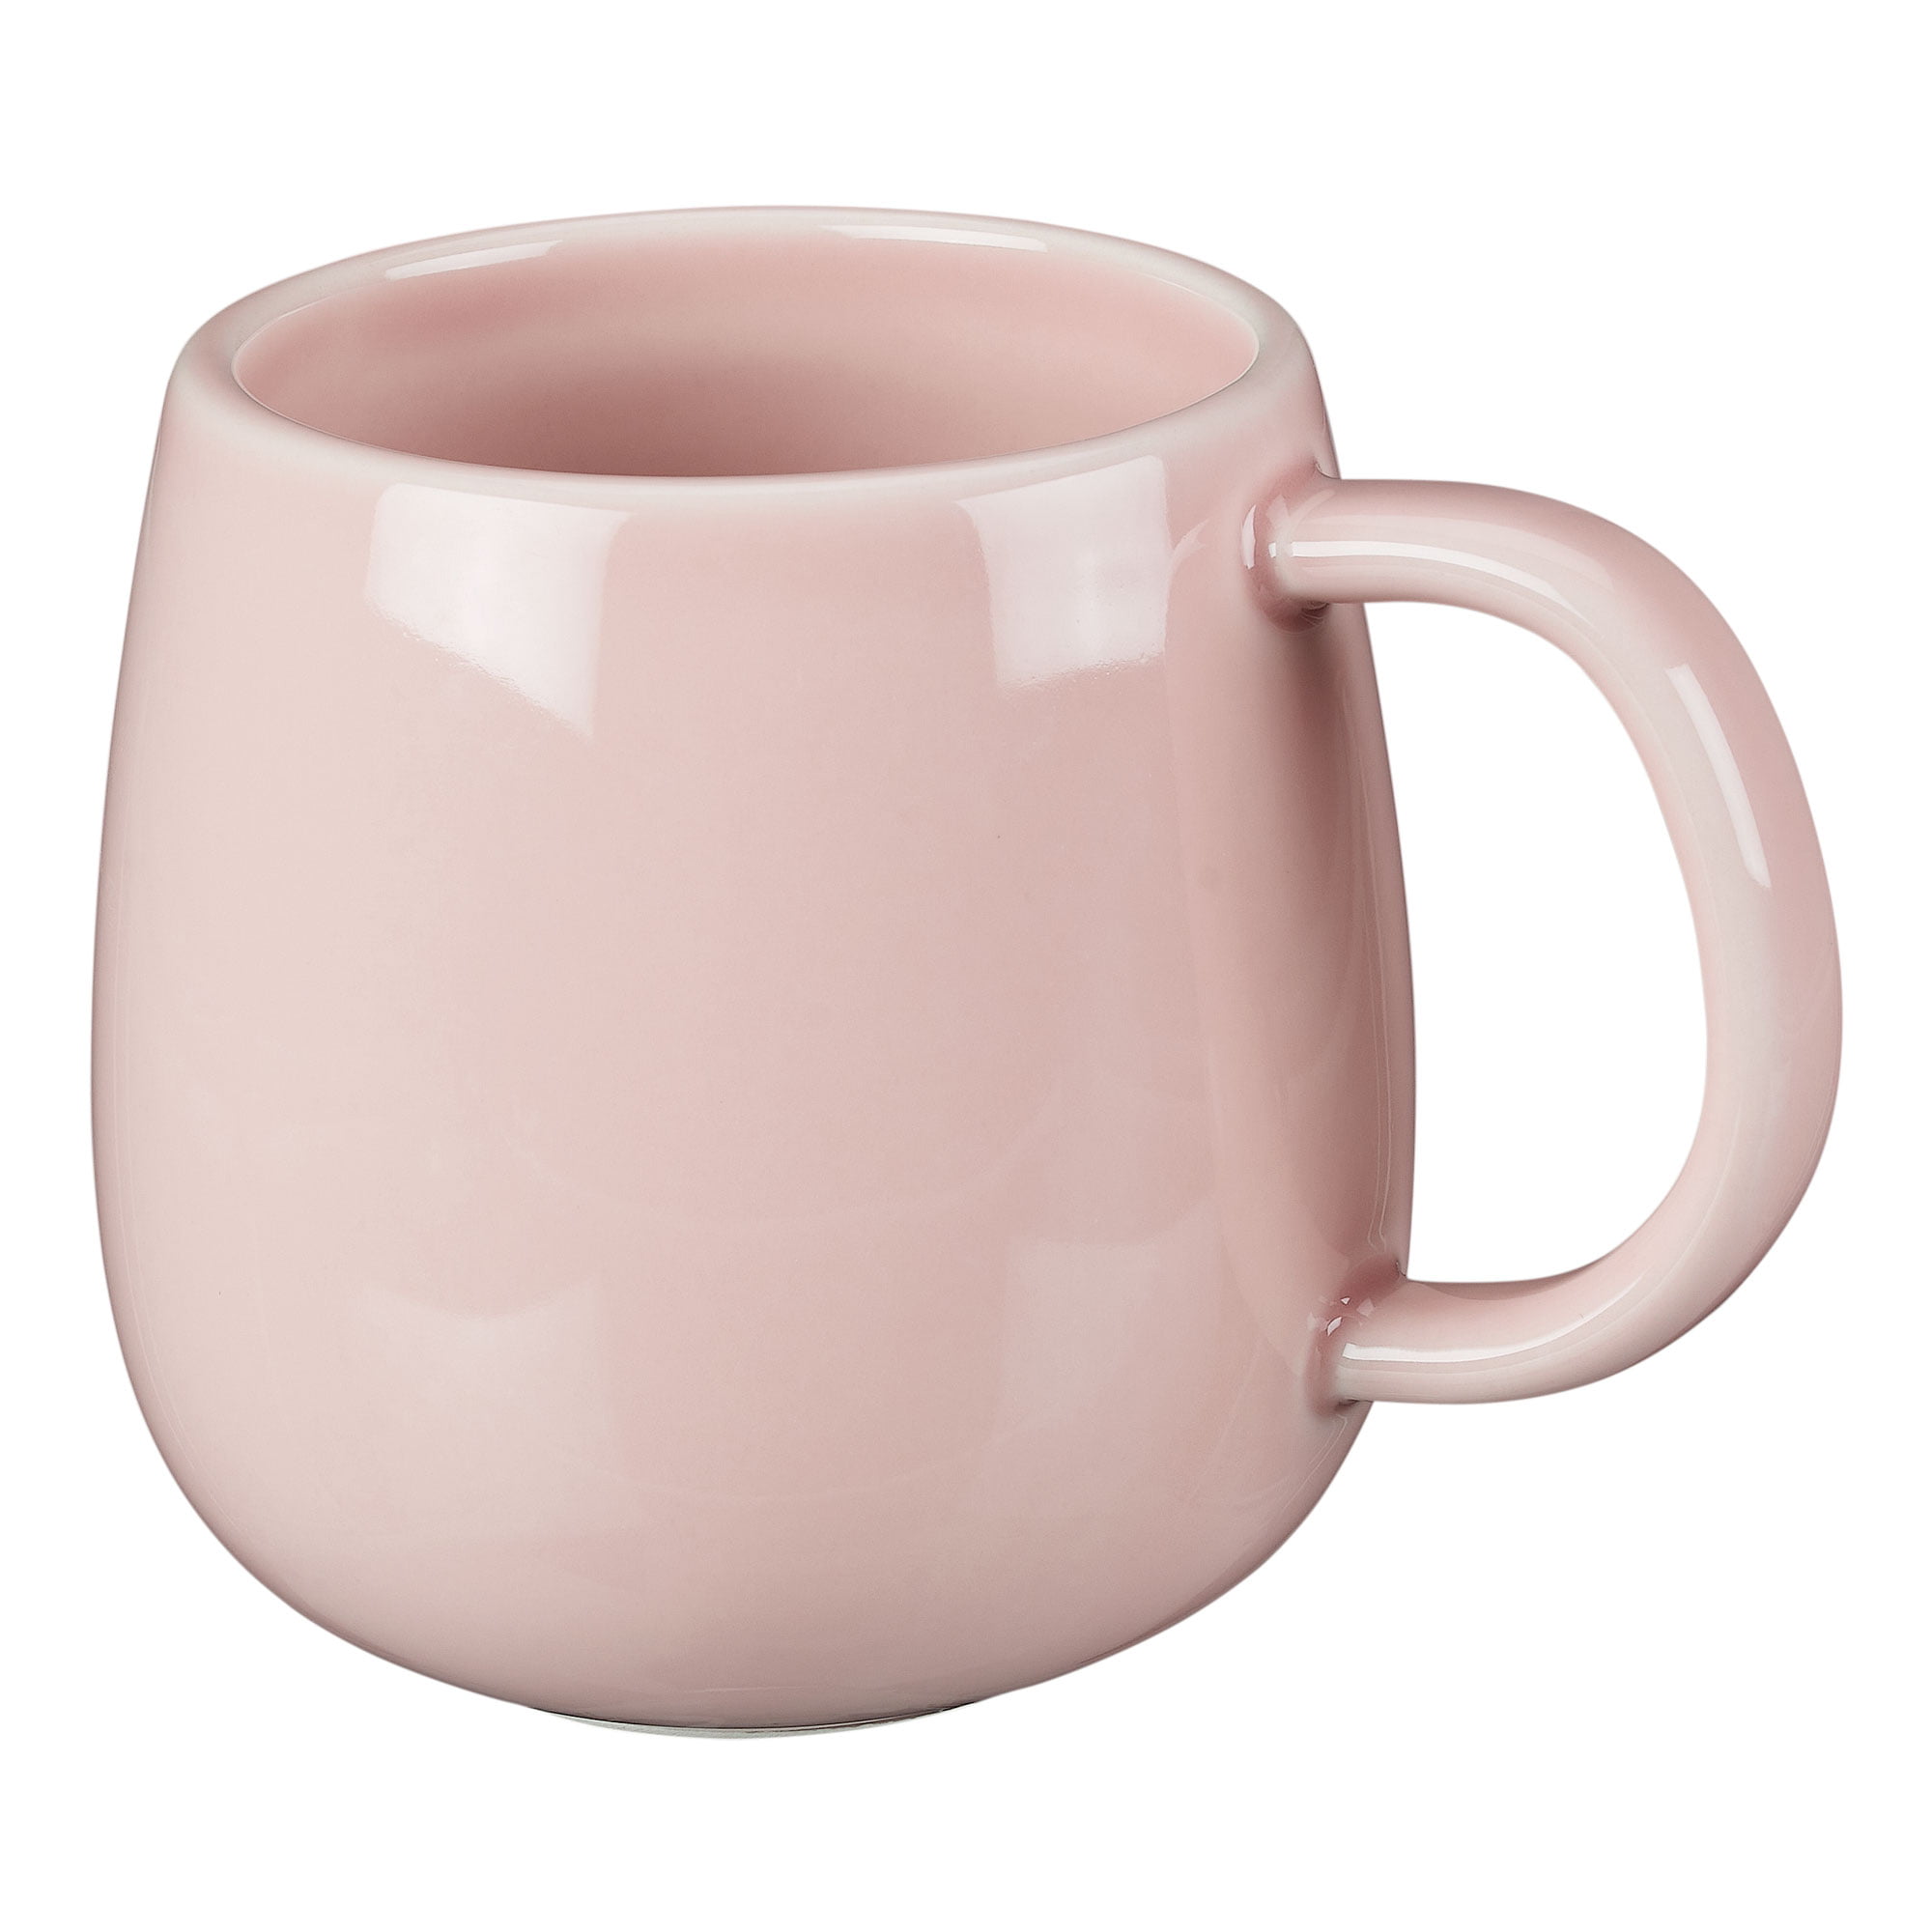 WAVEYU Ceramic Mug, Pink Large Coffee Mug Marble with Handle Decoration  with Sparky Gold Girly Coffe…See more WAVEYU Ceramic Mug, Pink Large Coffee